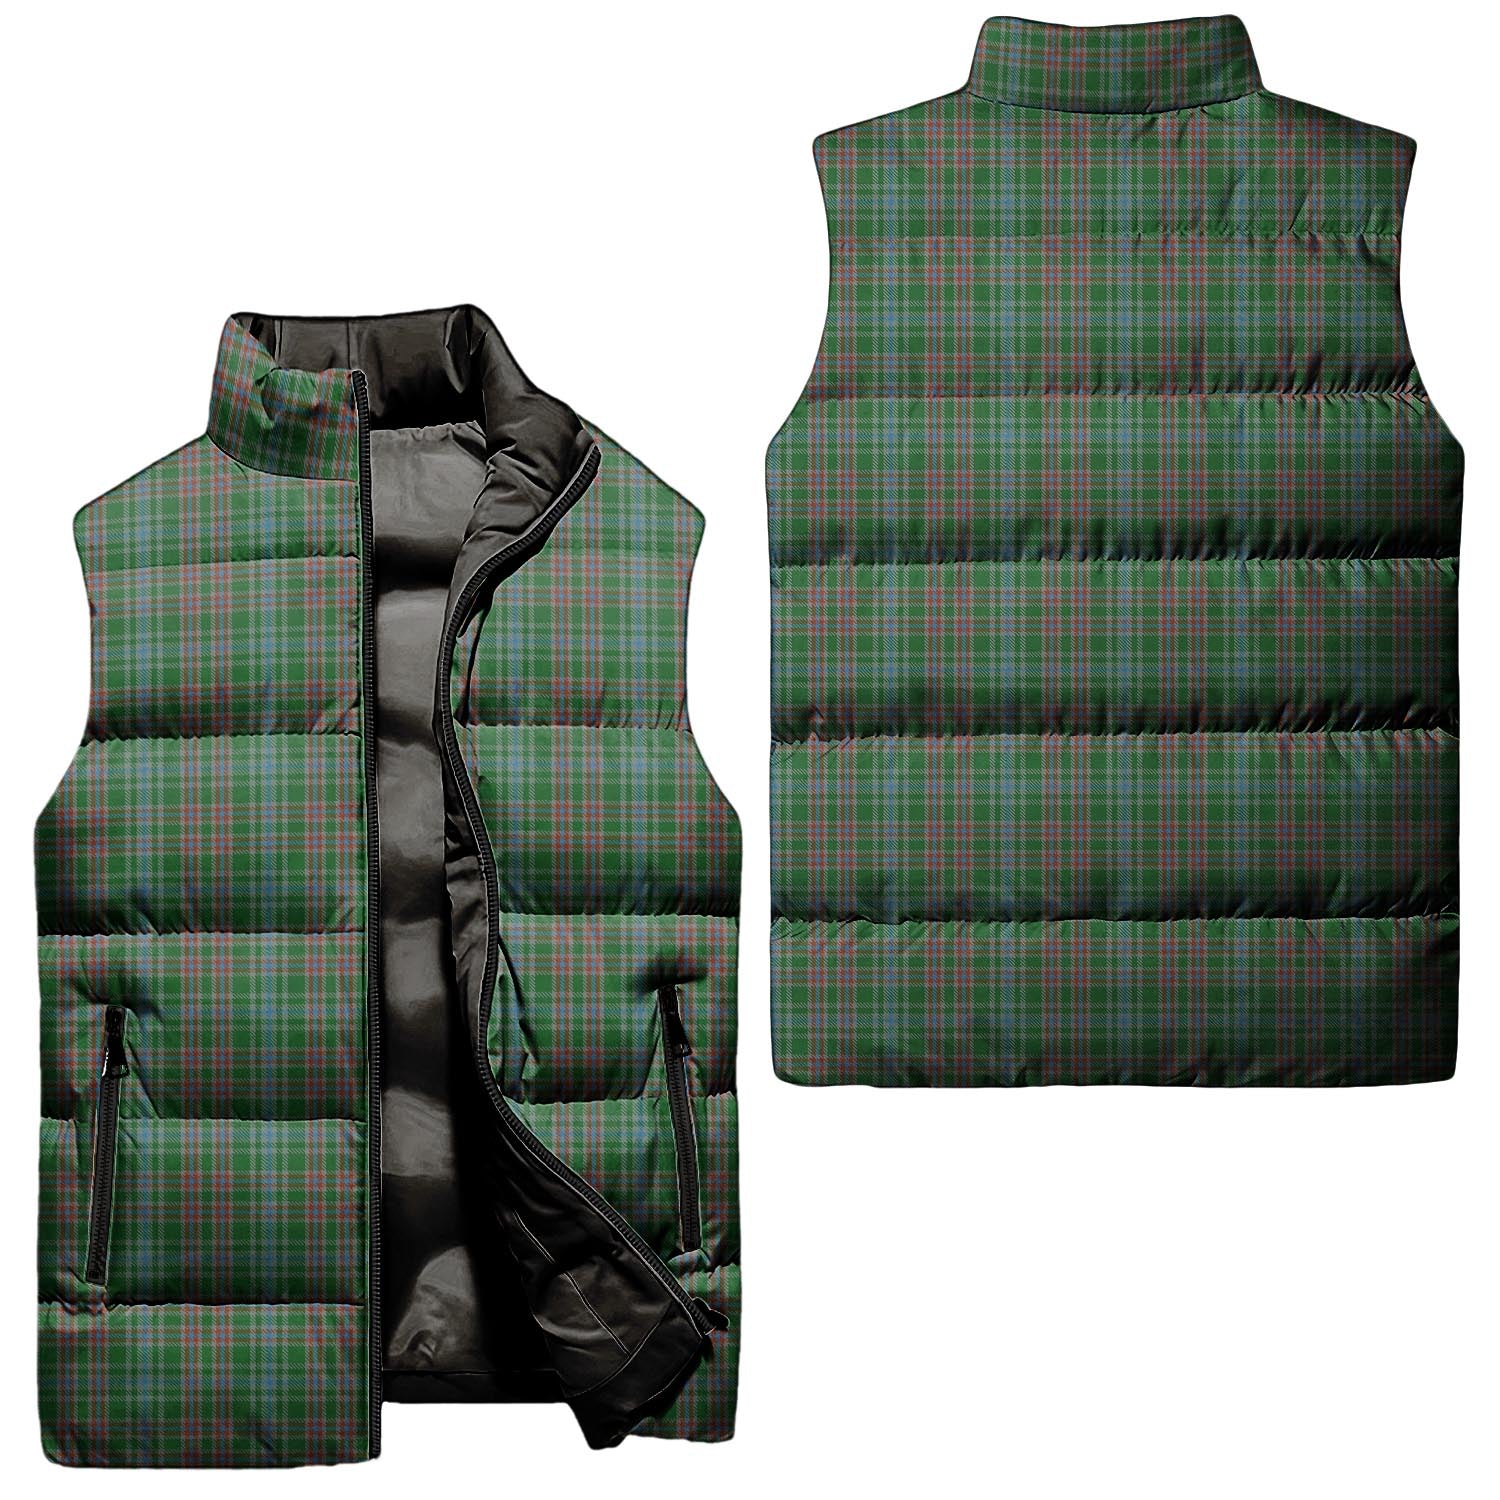 ralston-usa-tartan-puffer-vest-tartan-plaid-sleeveless-down-jacket